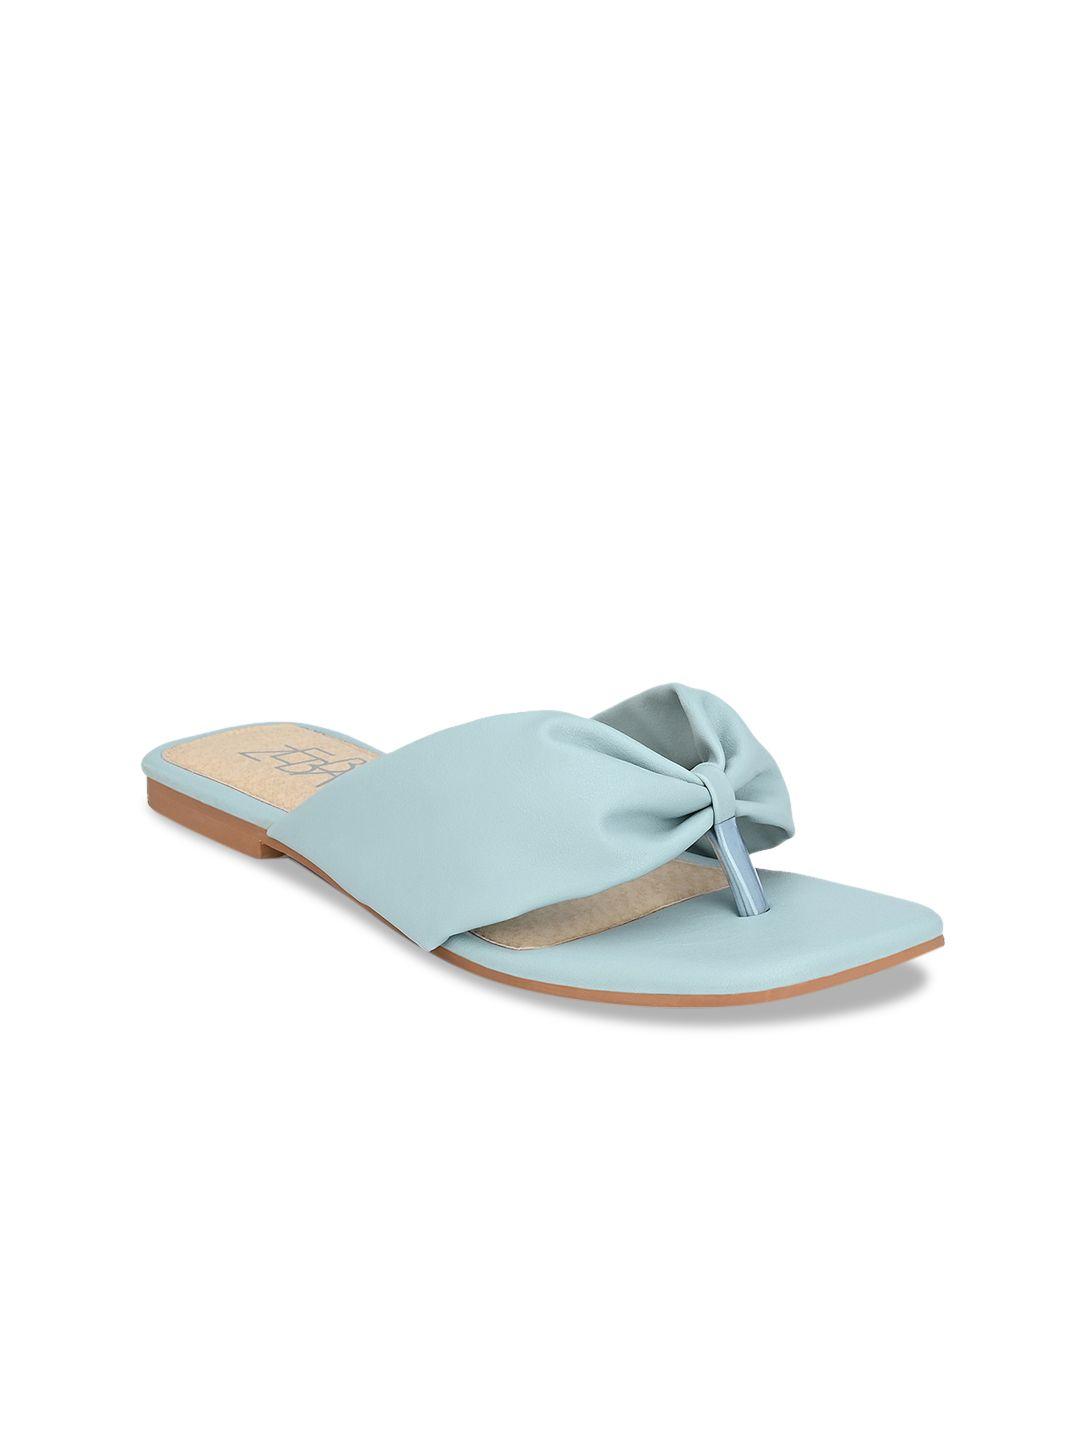 zebba women turquoise blue open toe flats